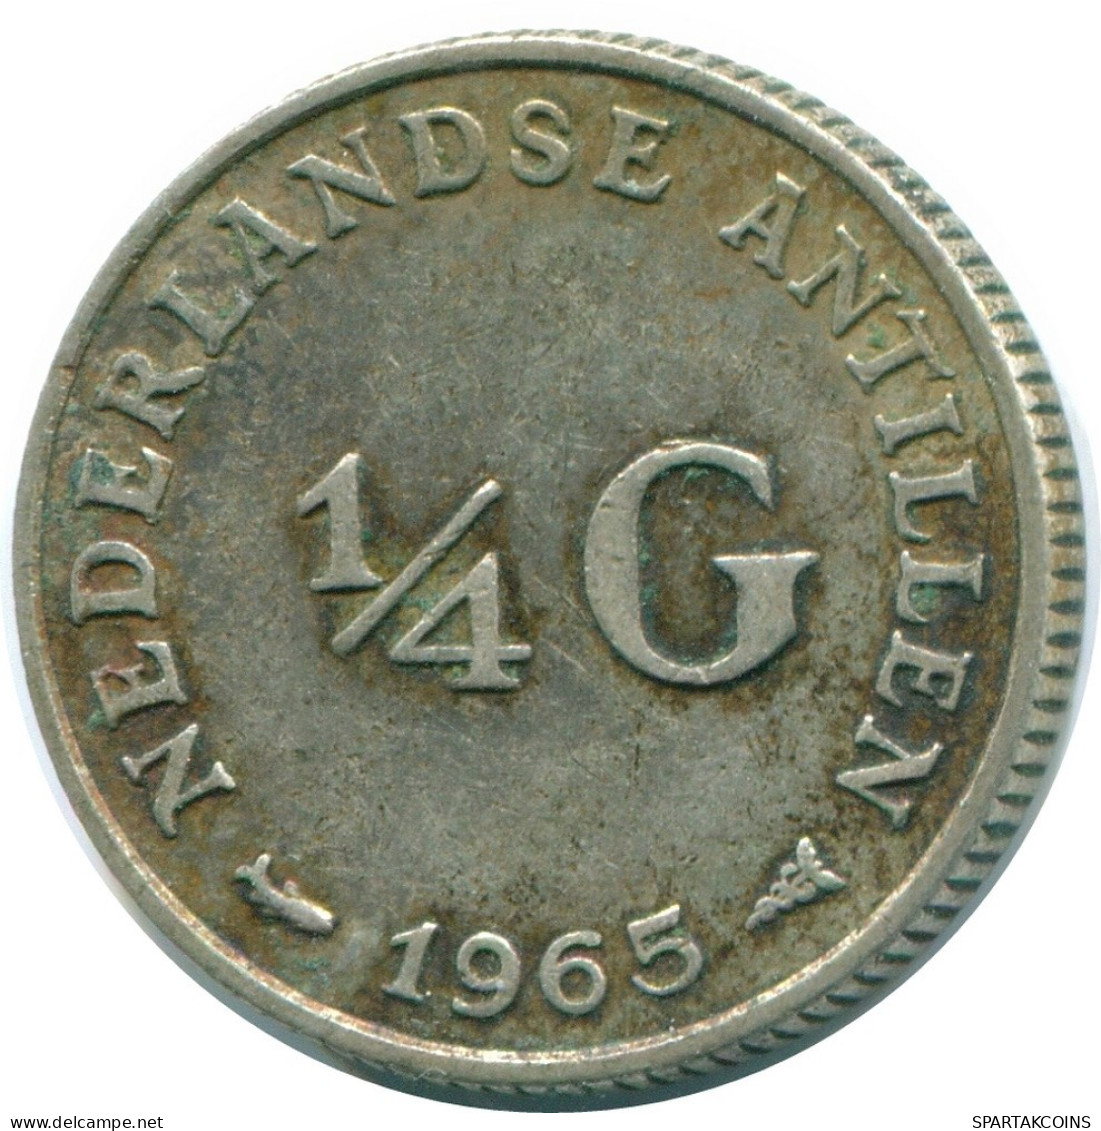 1/4 GULDEN 1965 NIEDERLÄNDISCHE ANTILLEN SILBER Koloniale Münze #NL11344.4.D.A - Netherlands Antilles